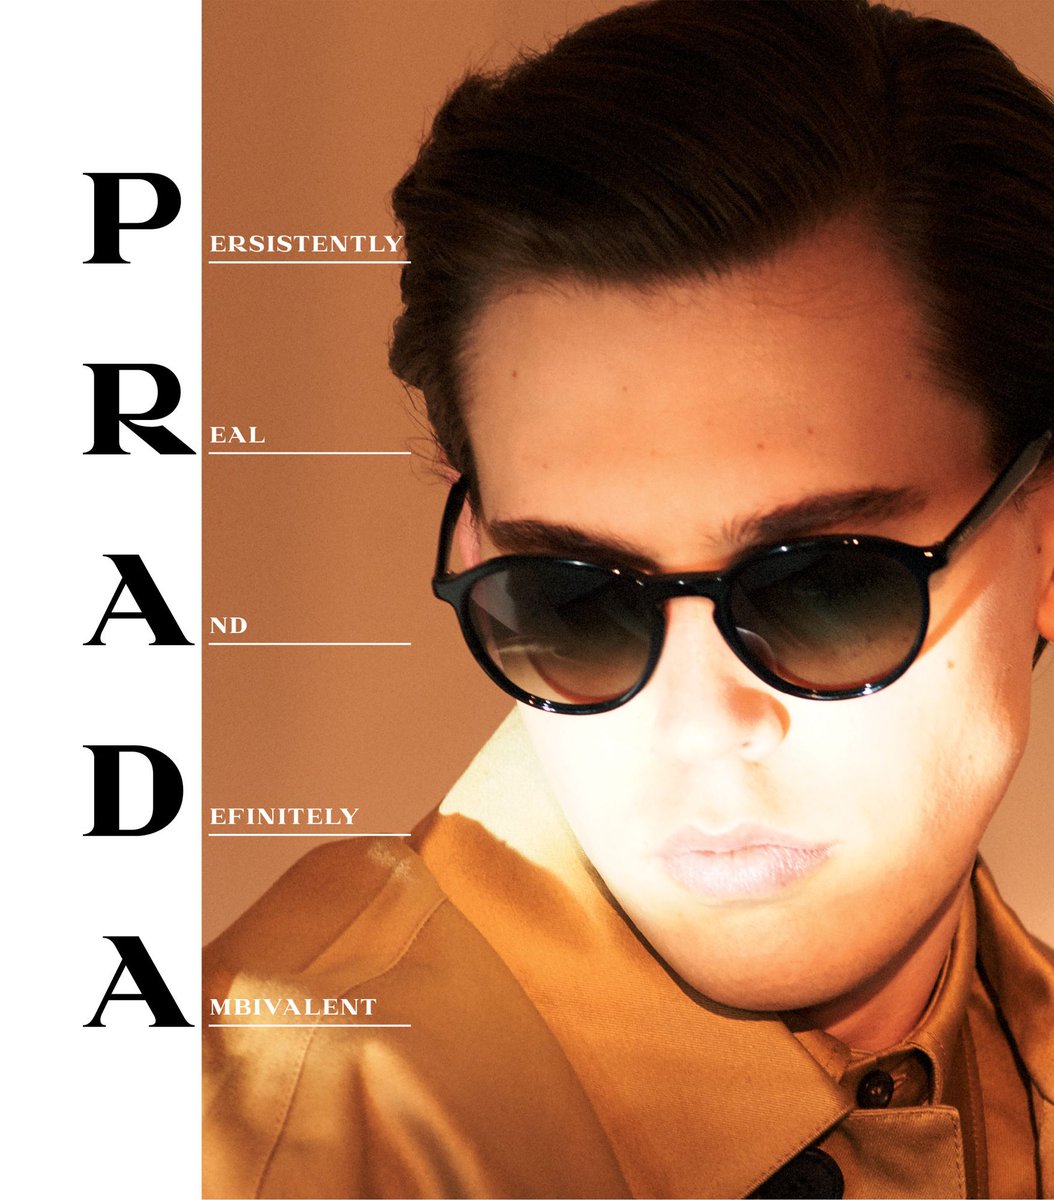 Prada Japan 俳優のオースティン バトラー Austinbutler が表現する プラダ の男性像 春夏メンズ広告キャンペーン Pradaacronyms の詳細は公式サイトでチェック T Co I29d2lokop Prada Pradass T Co Mpw2x1ju4z